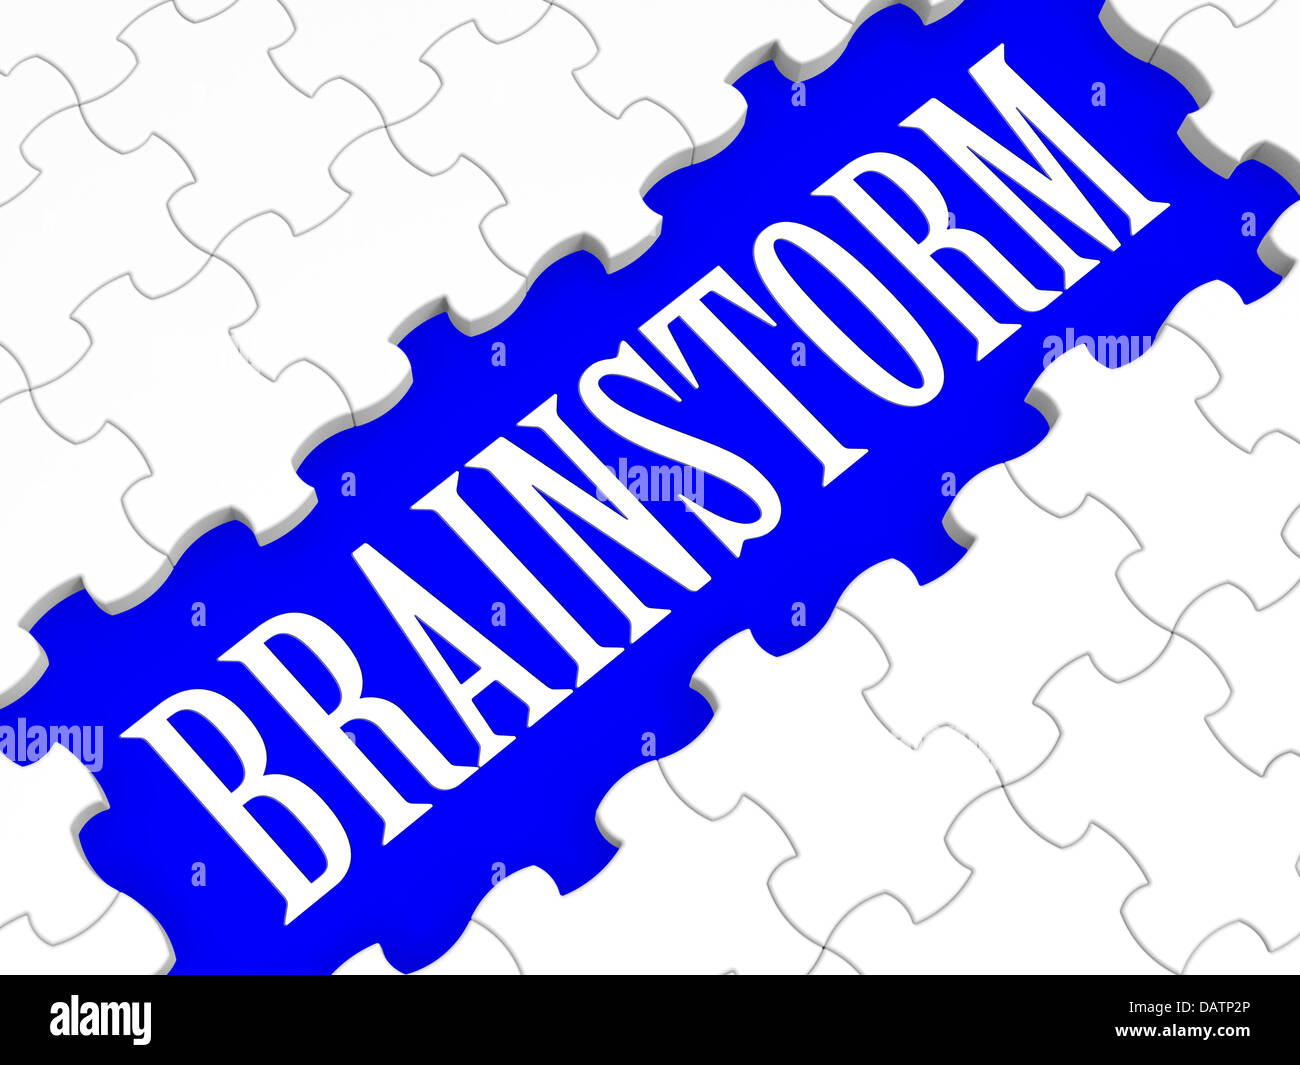 Brainstorm Puzzle Showing Creative Ideas Stock Photo